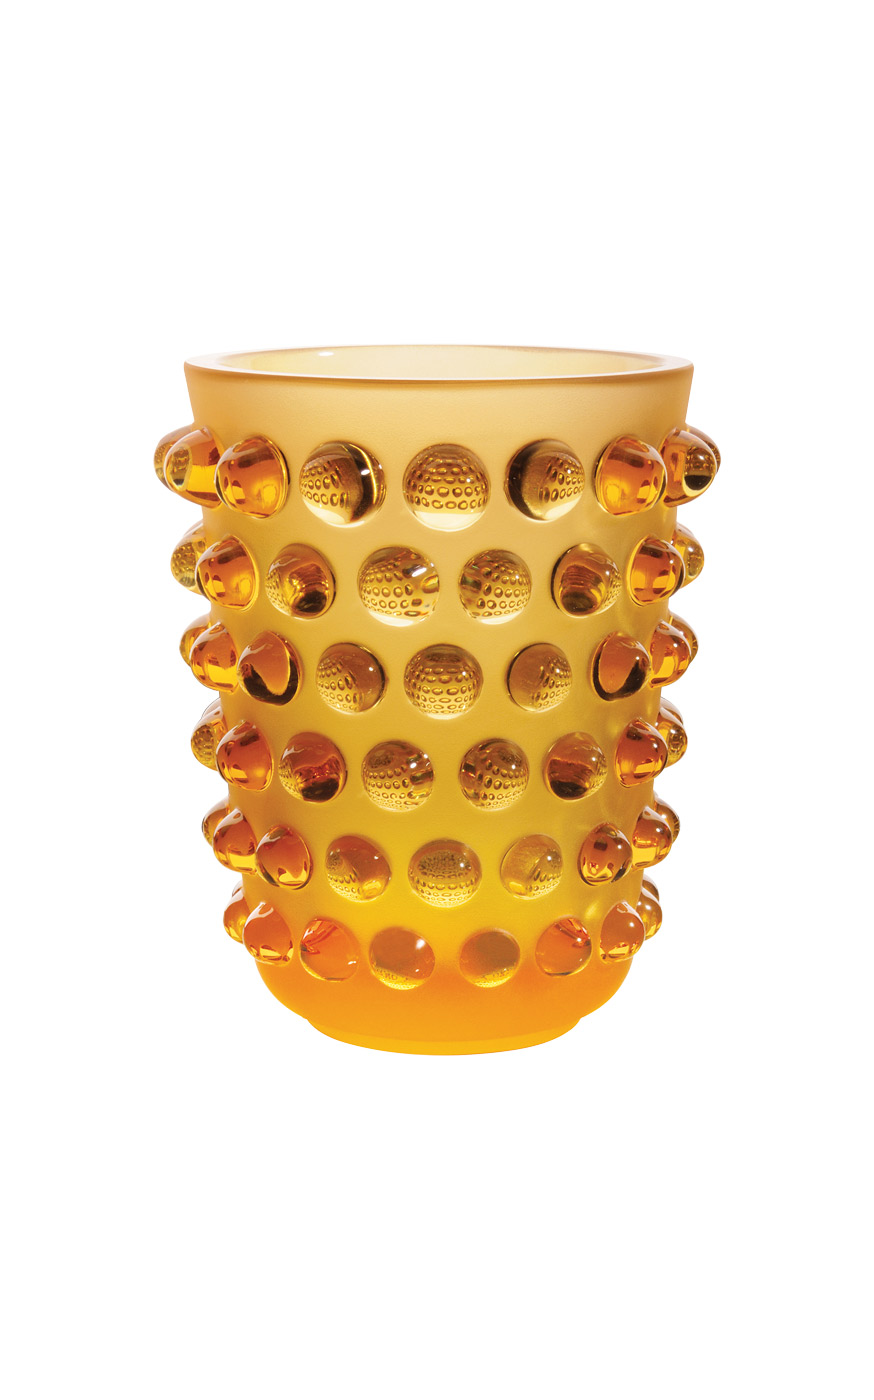 66 Lalique, Mossi Crystal Vase, Modaoperandi.com